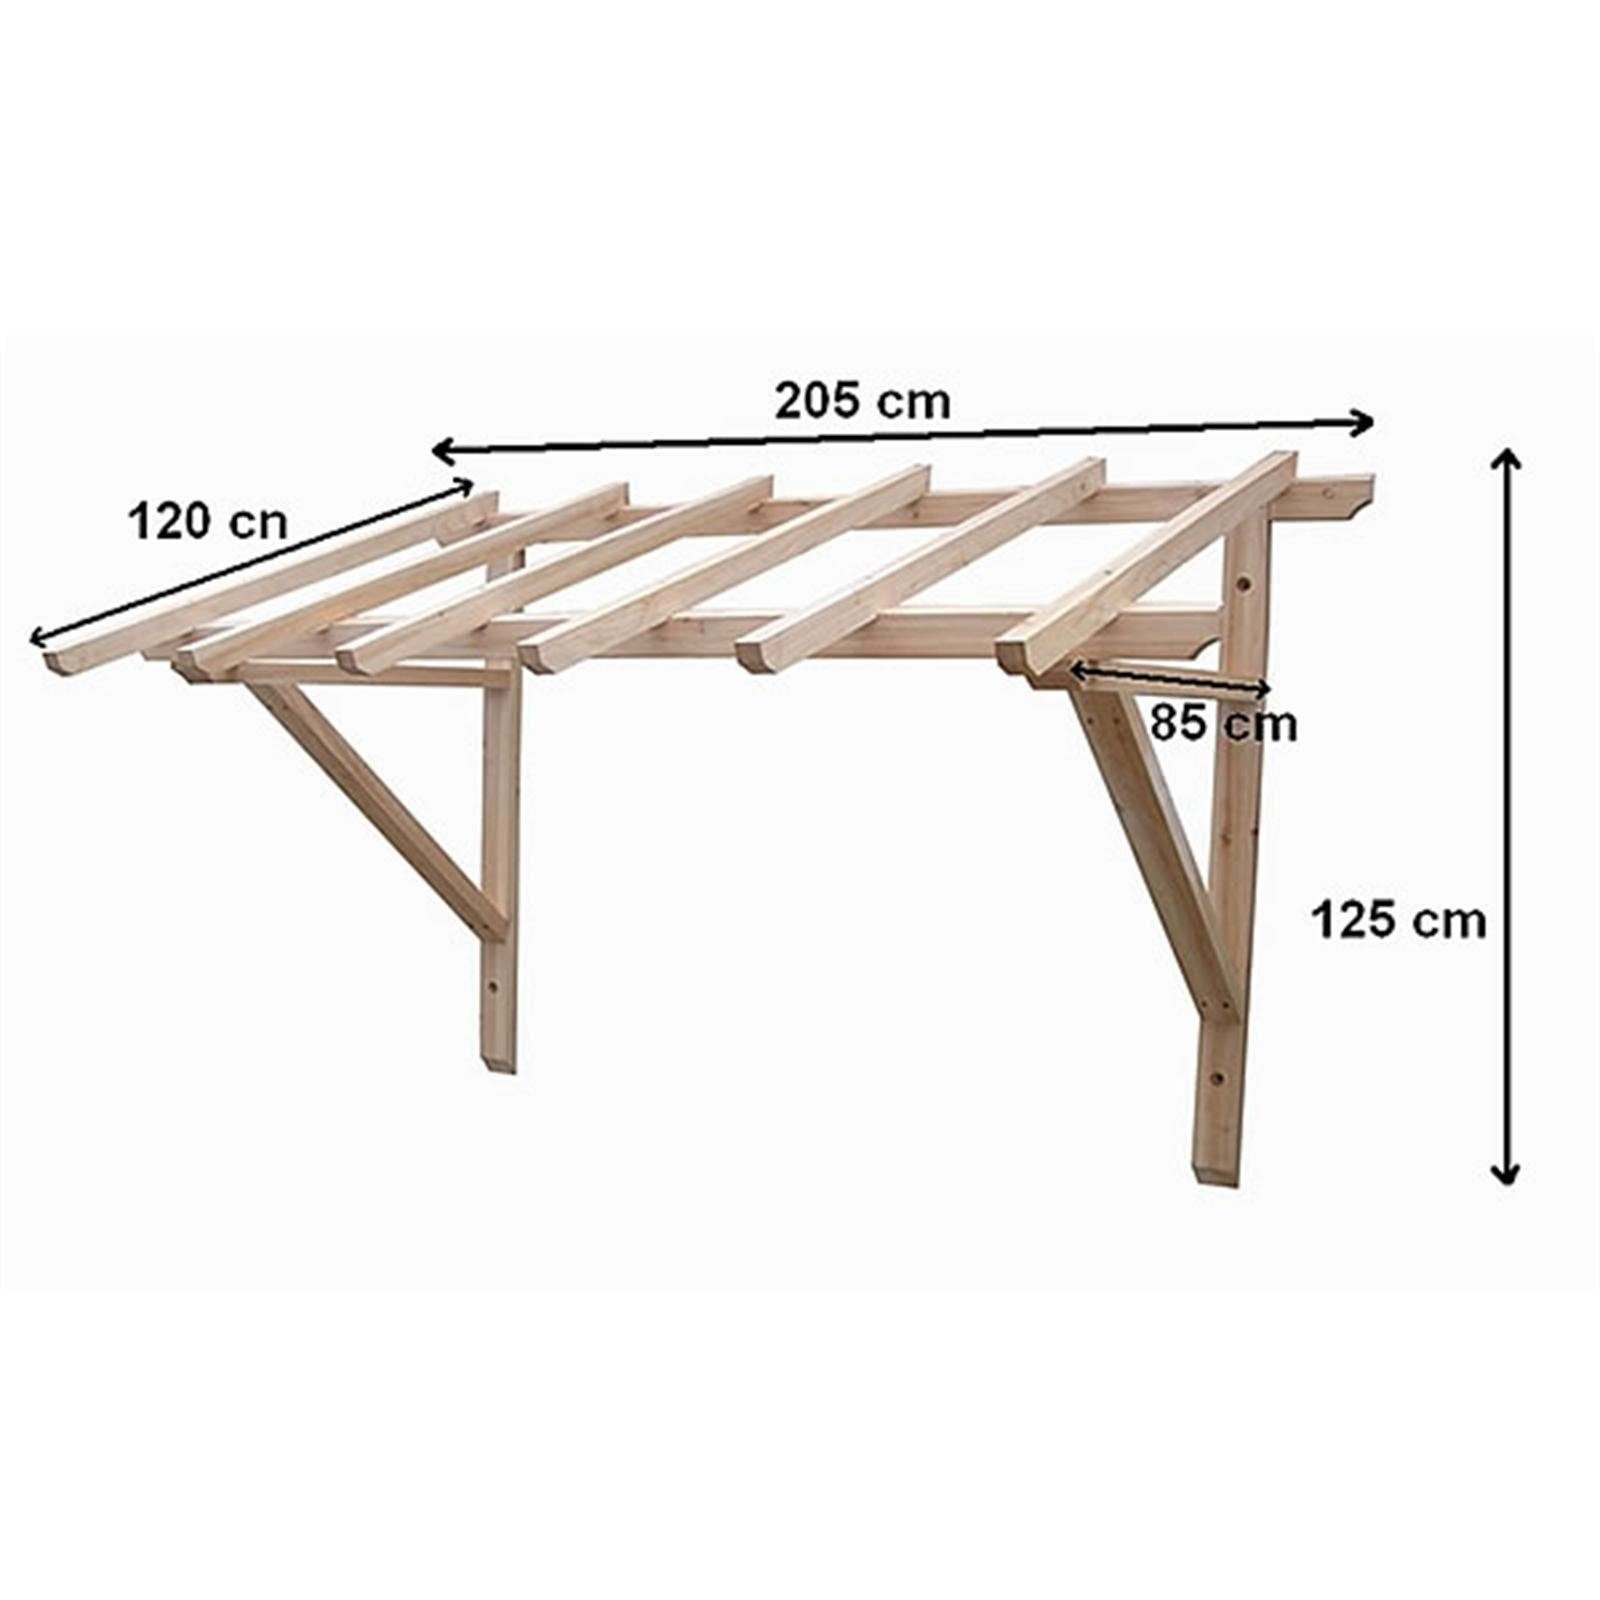 Melko Pultvordach Haustürvordach Holz Unbehandelt mm Pultvordach Türdach 205 cm Überdachung (Stück), aus 2050 NEU